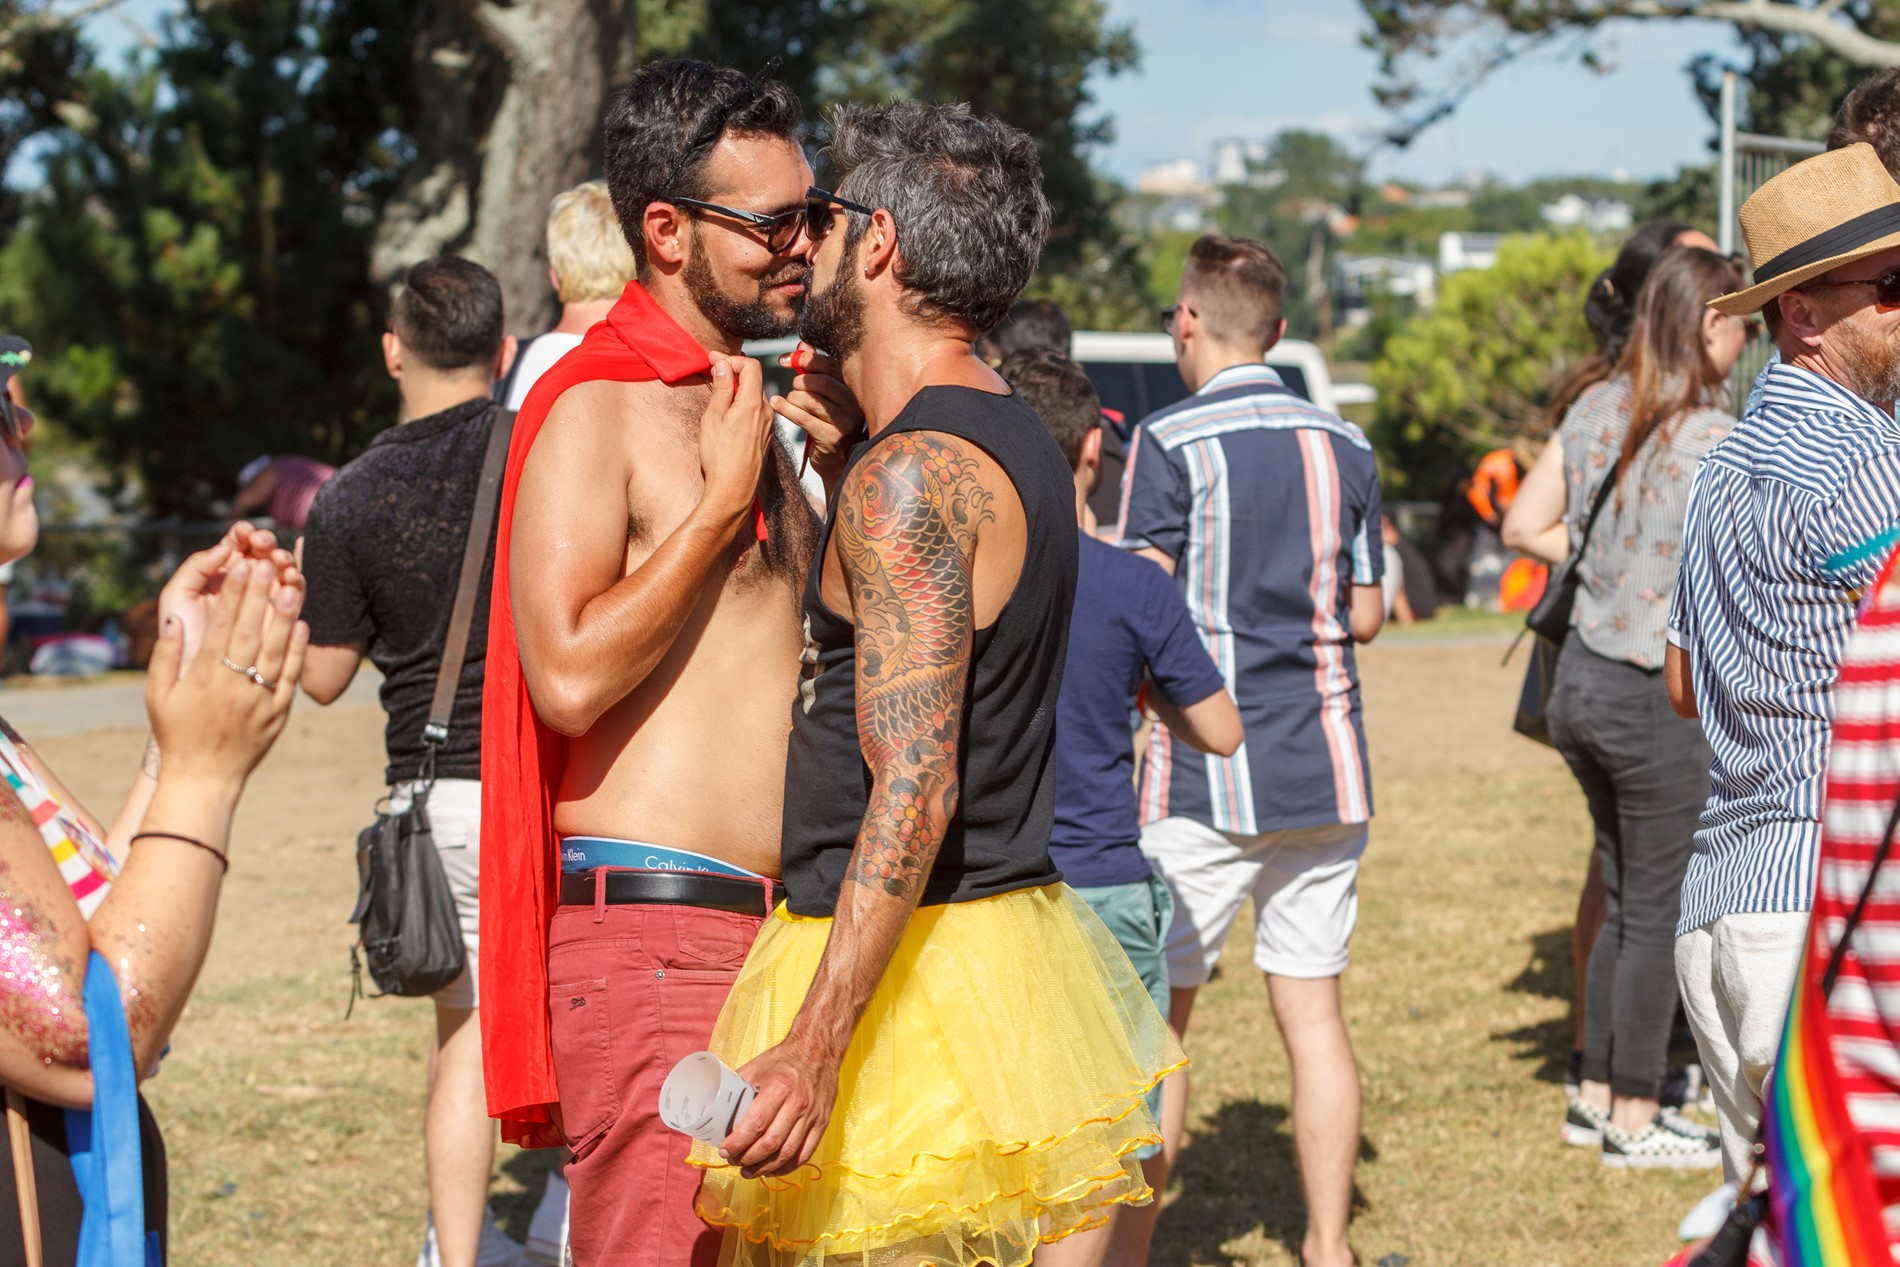 BGO 20Th Photos Big Gay Out Ending HIV Culture Artcile